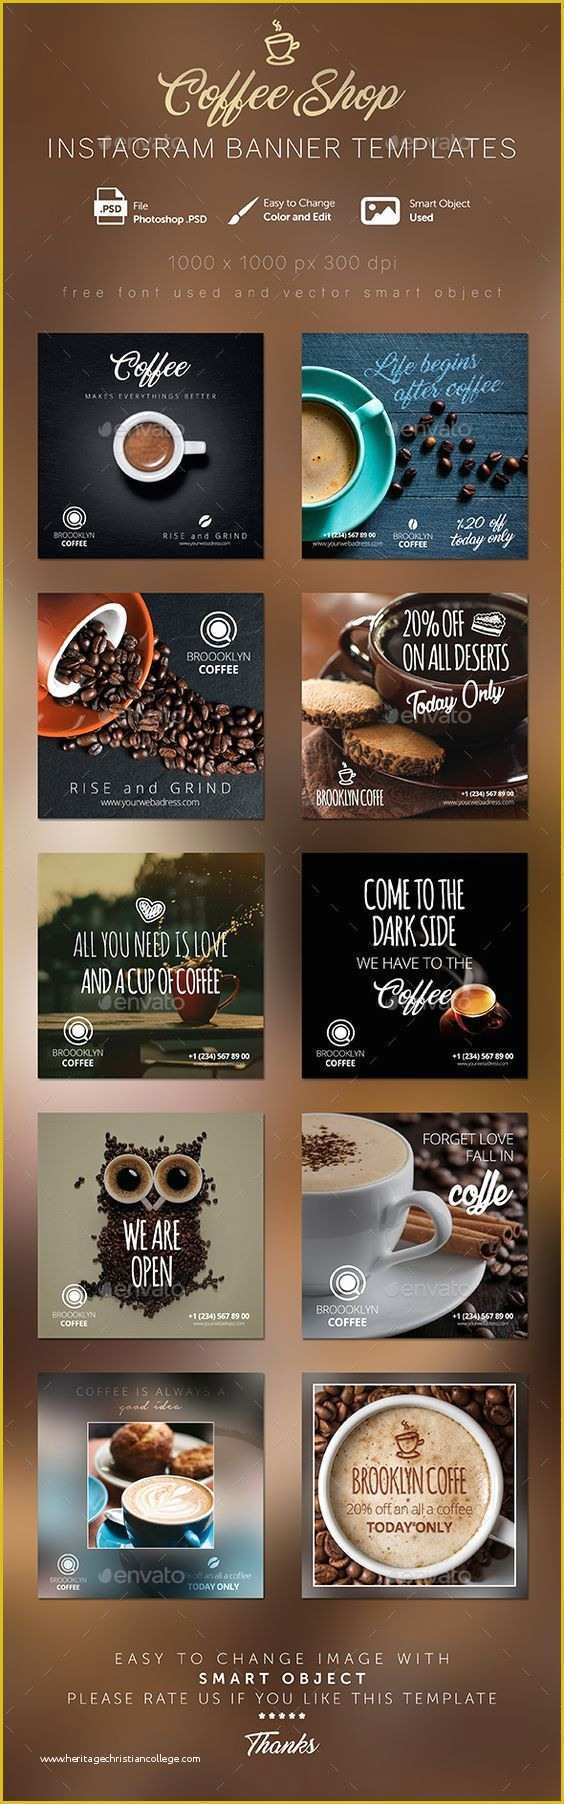 Coffee Shop Website Template Free Download Of Die Besten 25 Banner Template Ideen Auf Pinterest